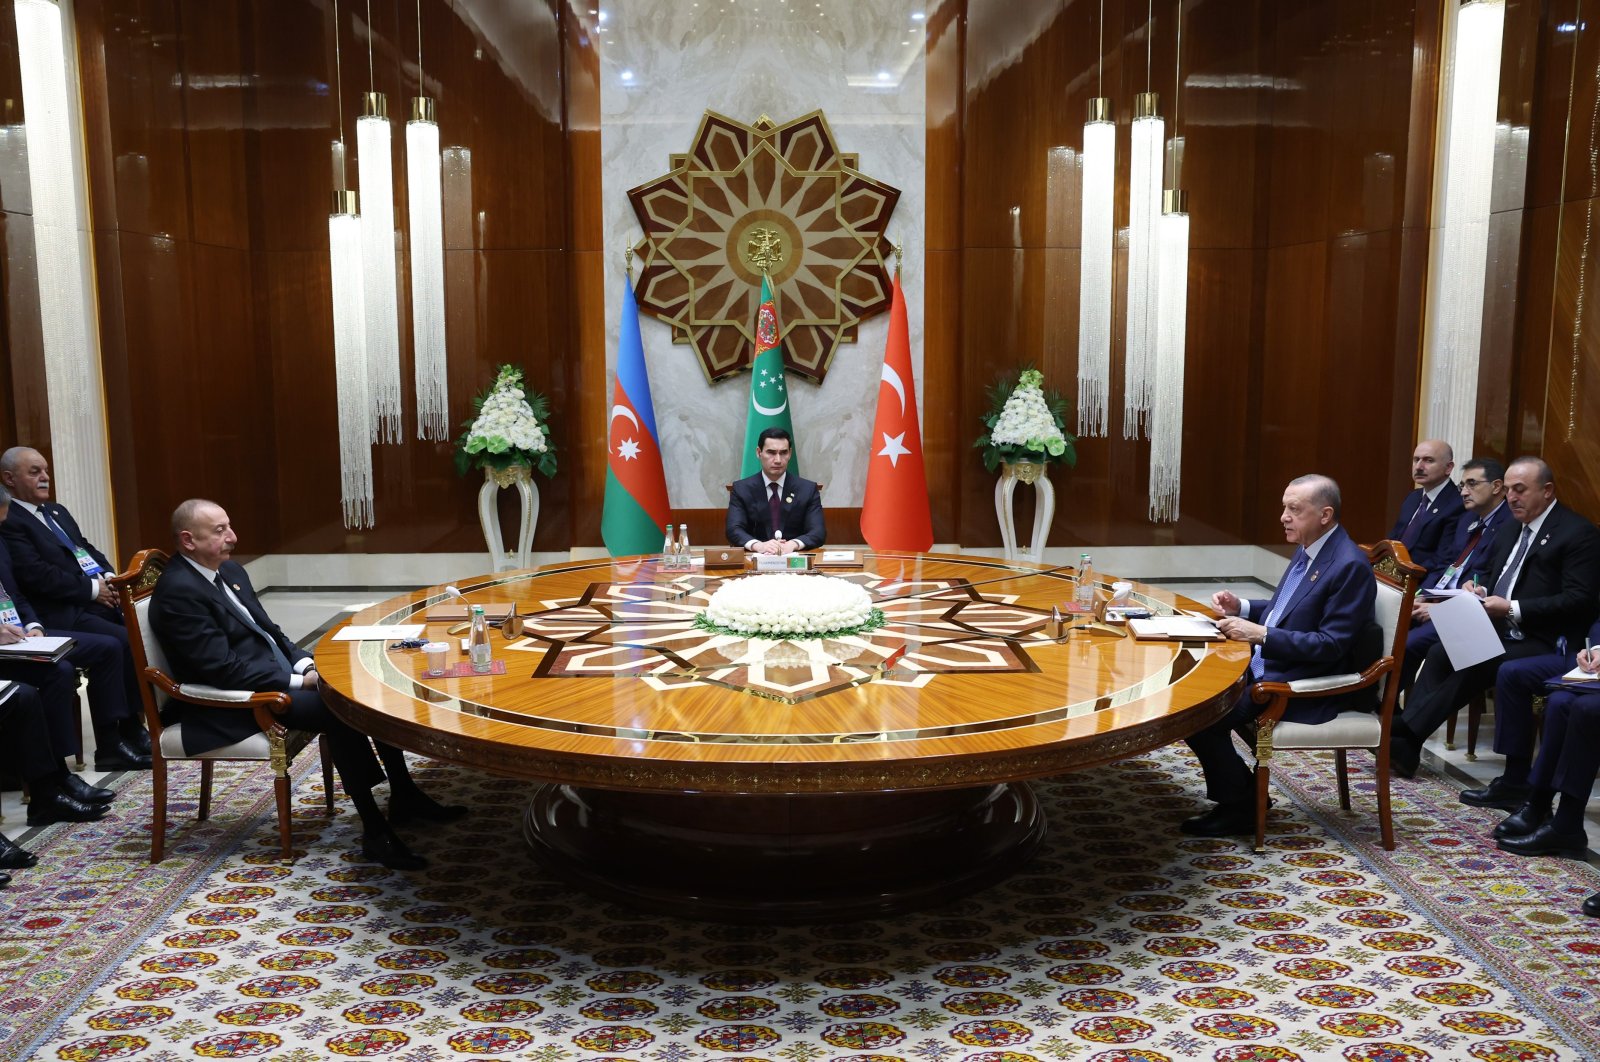 Azerbaijani President Ilham Aliyev (L), Turkmen President Serdar Berdimuhamedov (C) and President Recep Tayyip Erdoğan (R) attend a trilateral summit in Awaza, Turkmenistan, Dec. 14, 2022. (IHA Photo)